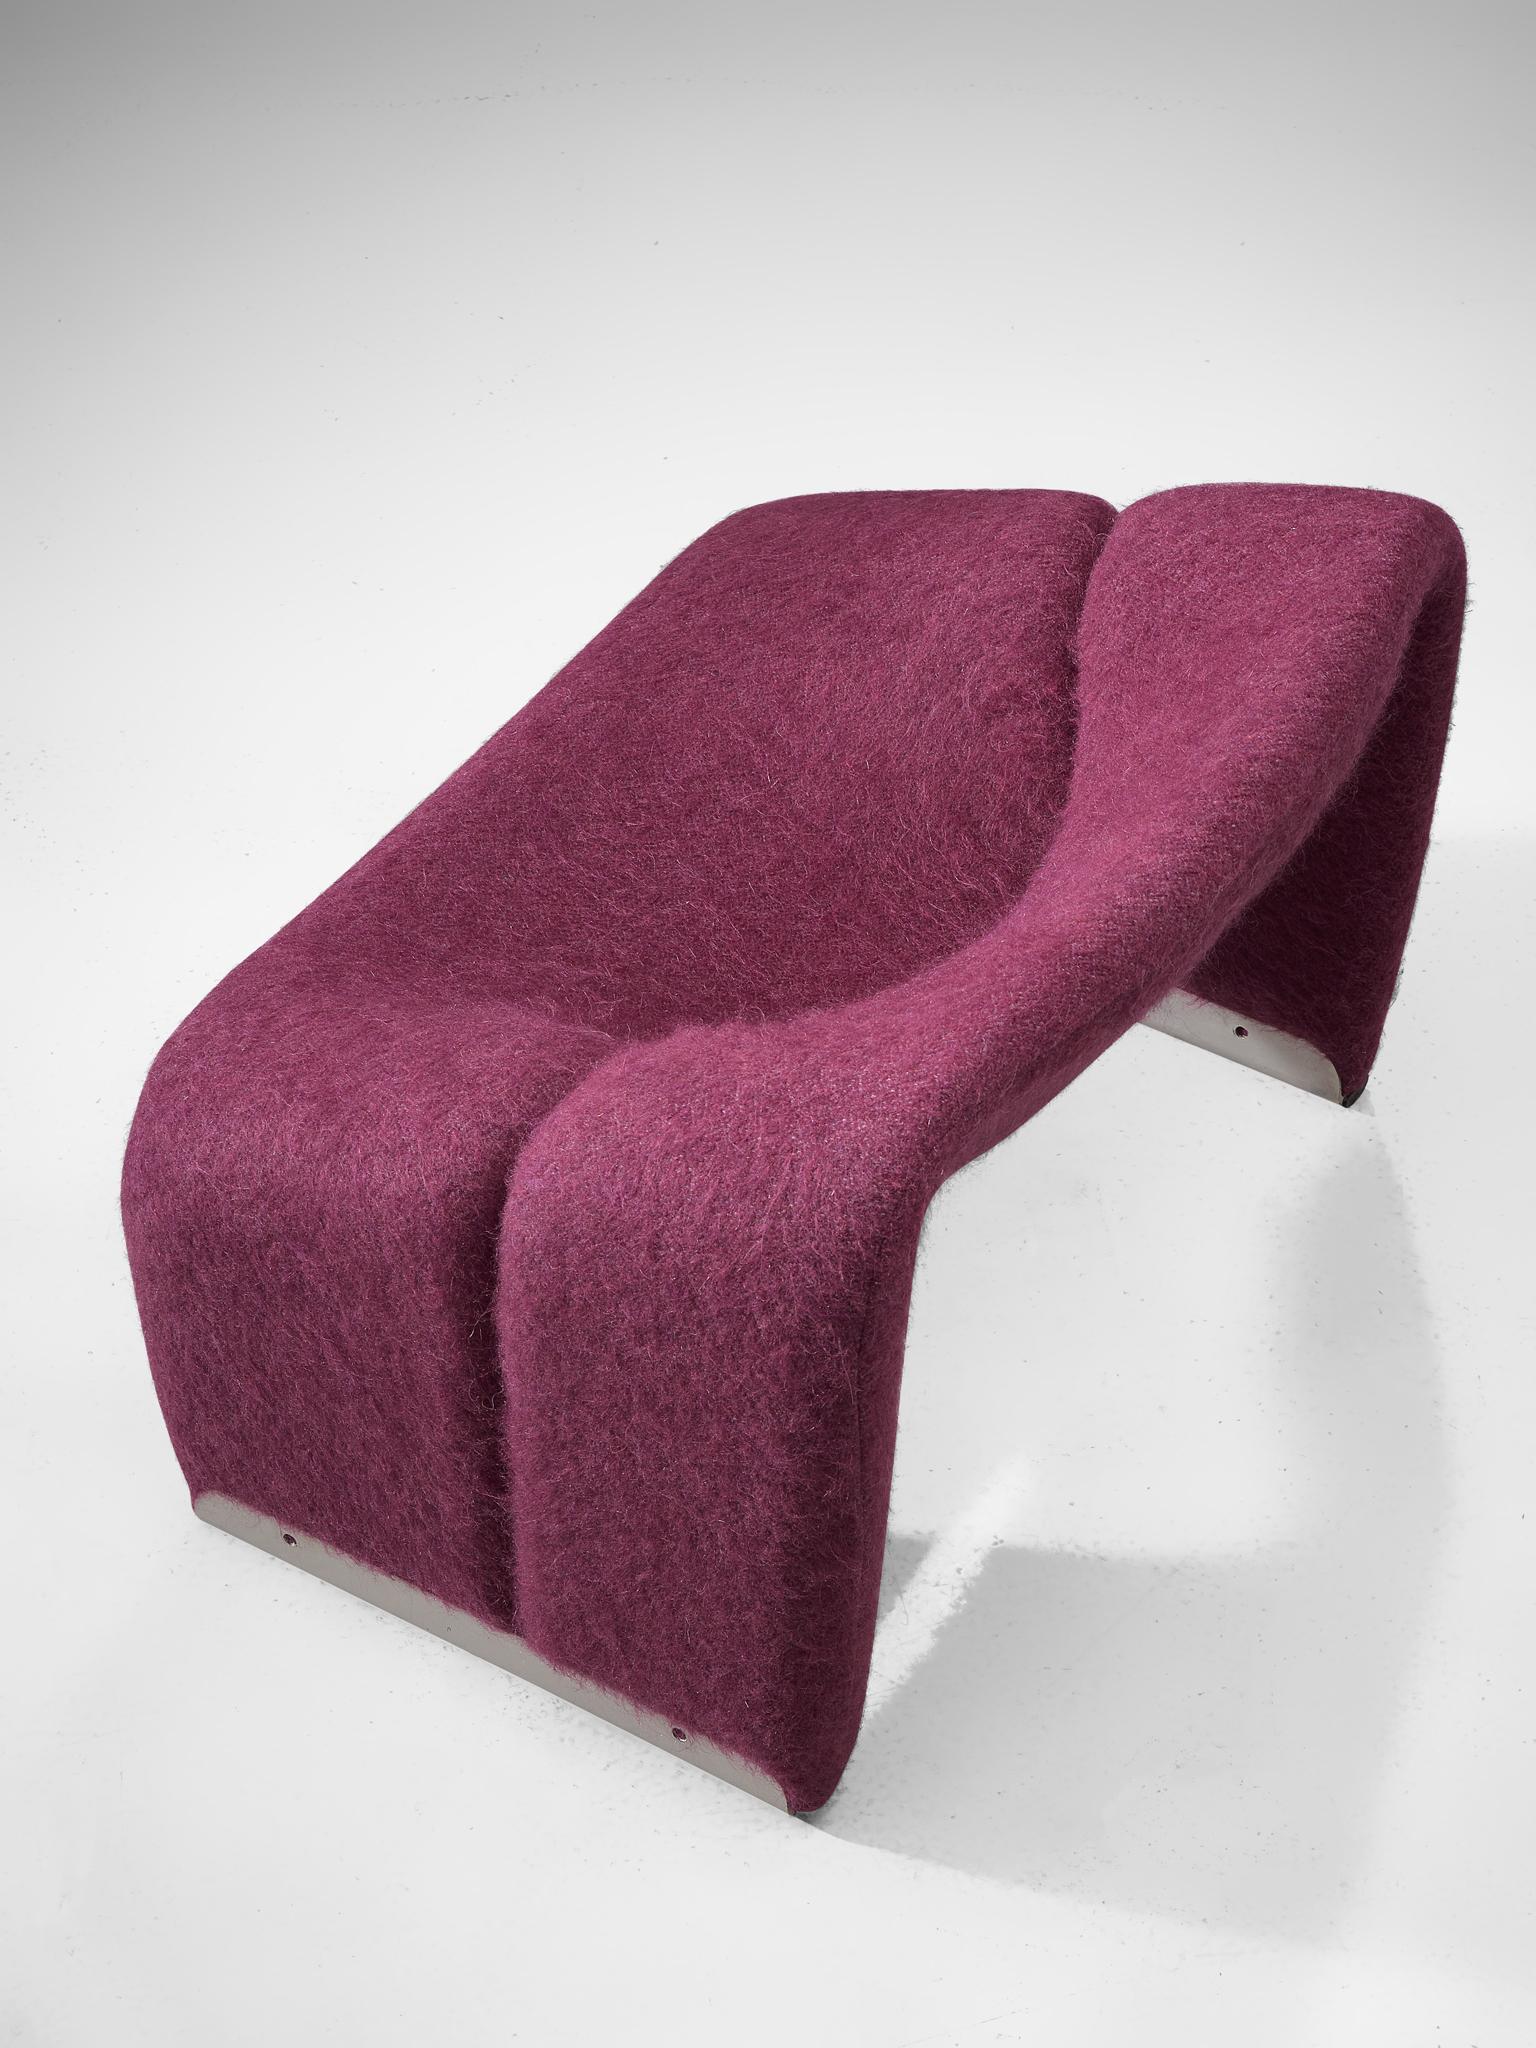 Pierre Paulin 'Groovy' Lounge Chairs Customizable in Pierre Frey Wool Upholstery 1